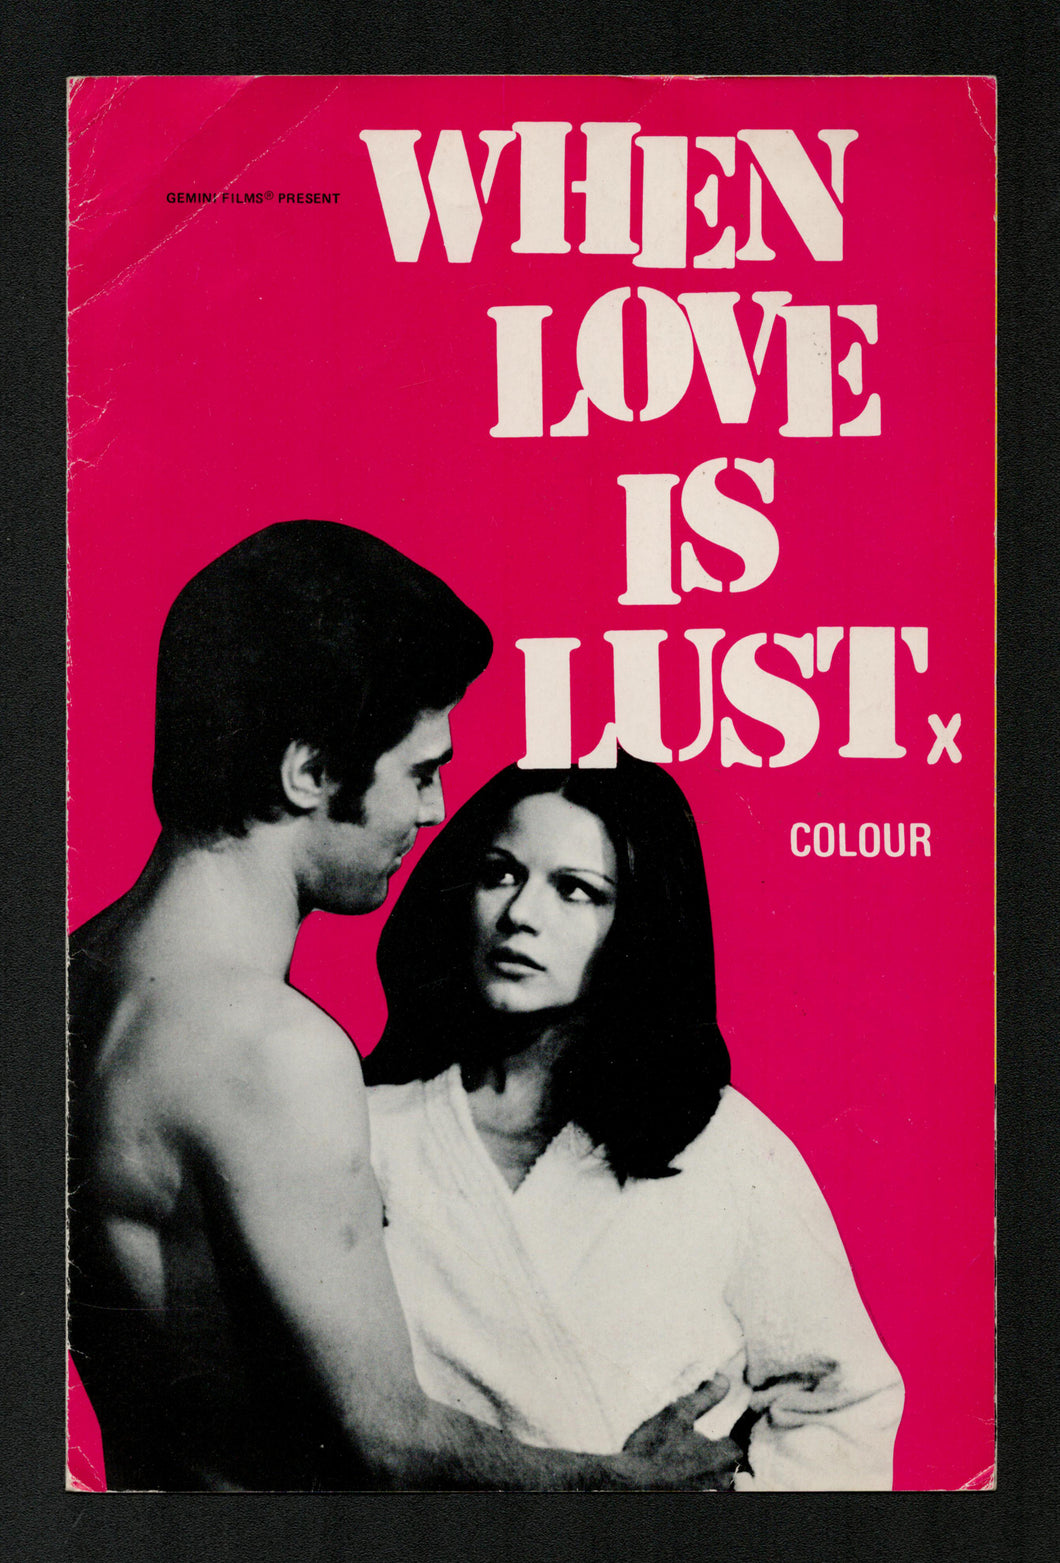 When Love Is Lust, 1973